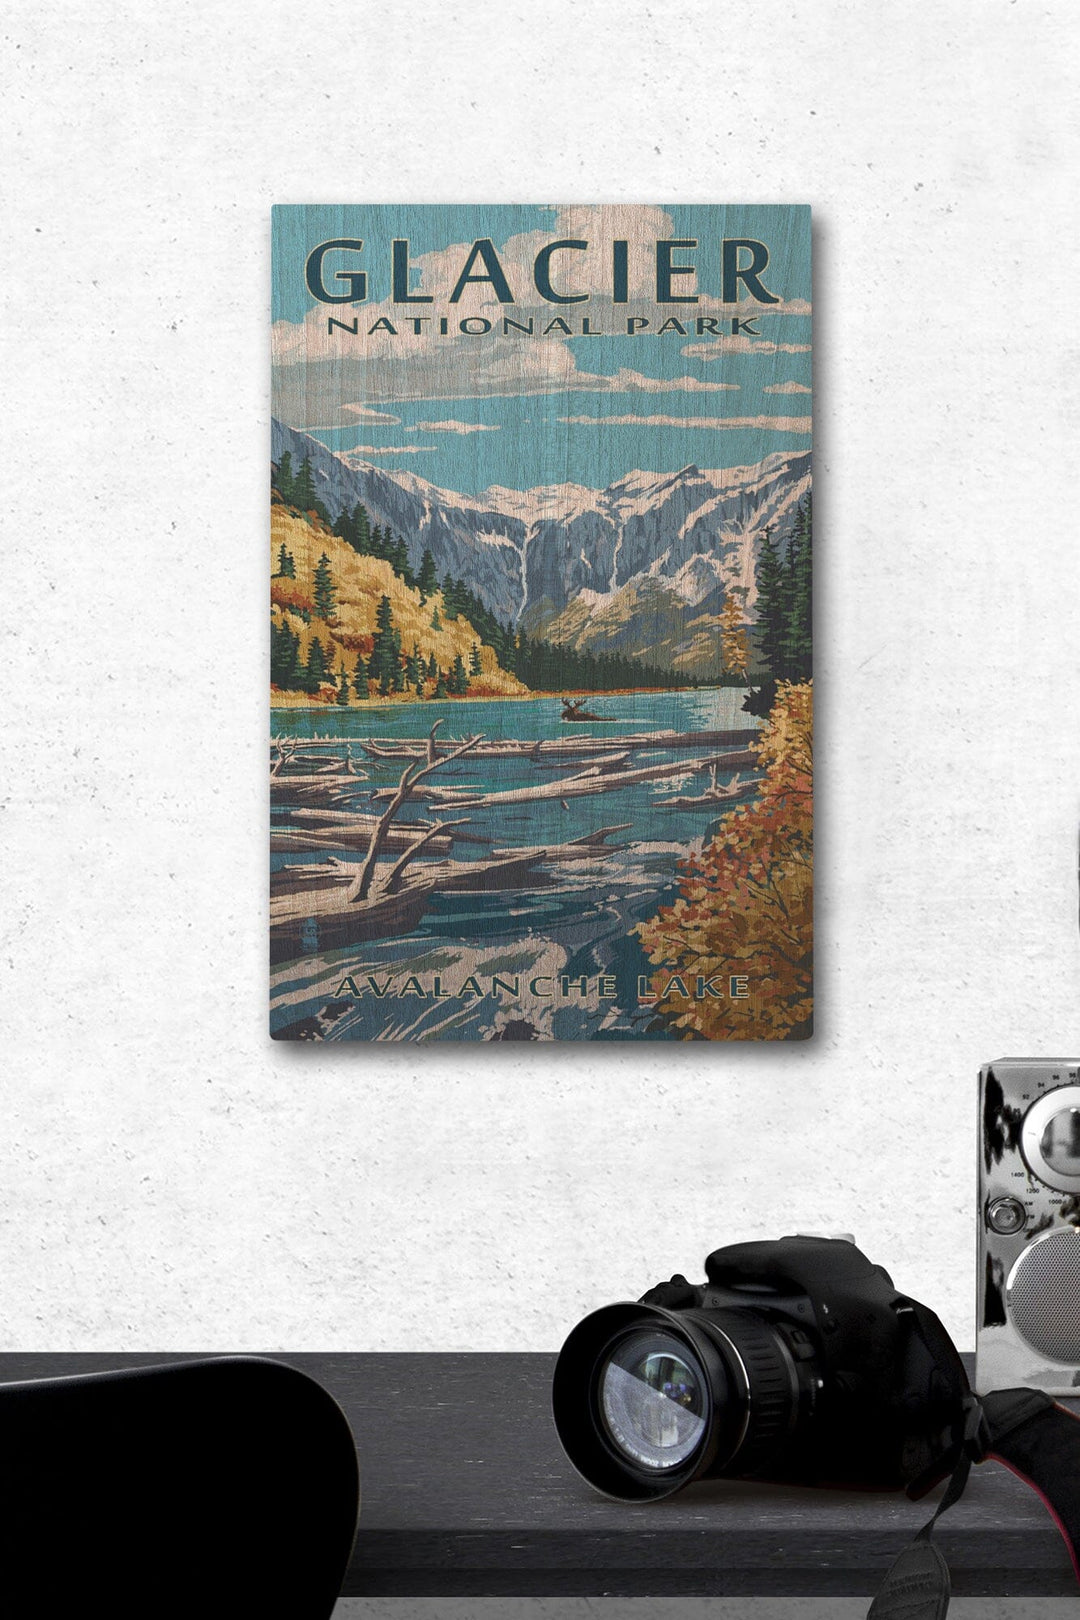 Glacier National Park, Montana, Avalanche Lake Illustration, Lantern Press Artwork, Wood Signs and Postcards Wood Lantern Press 12 x 18 Wood Gallery Print 